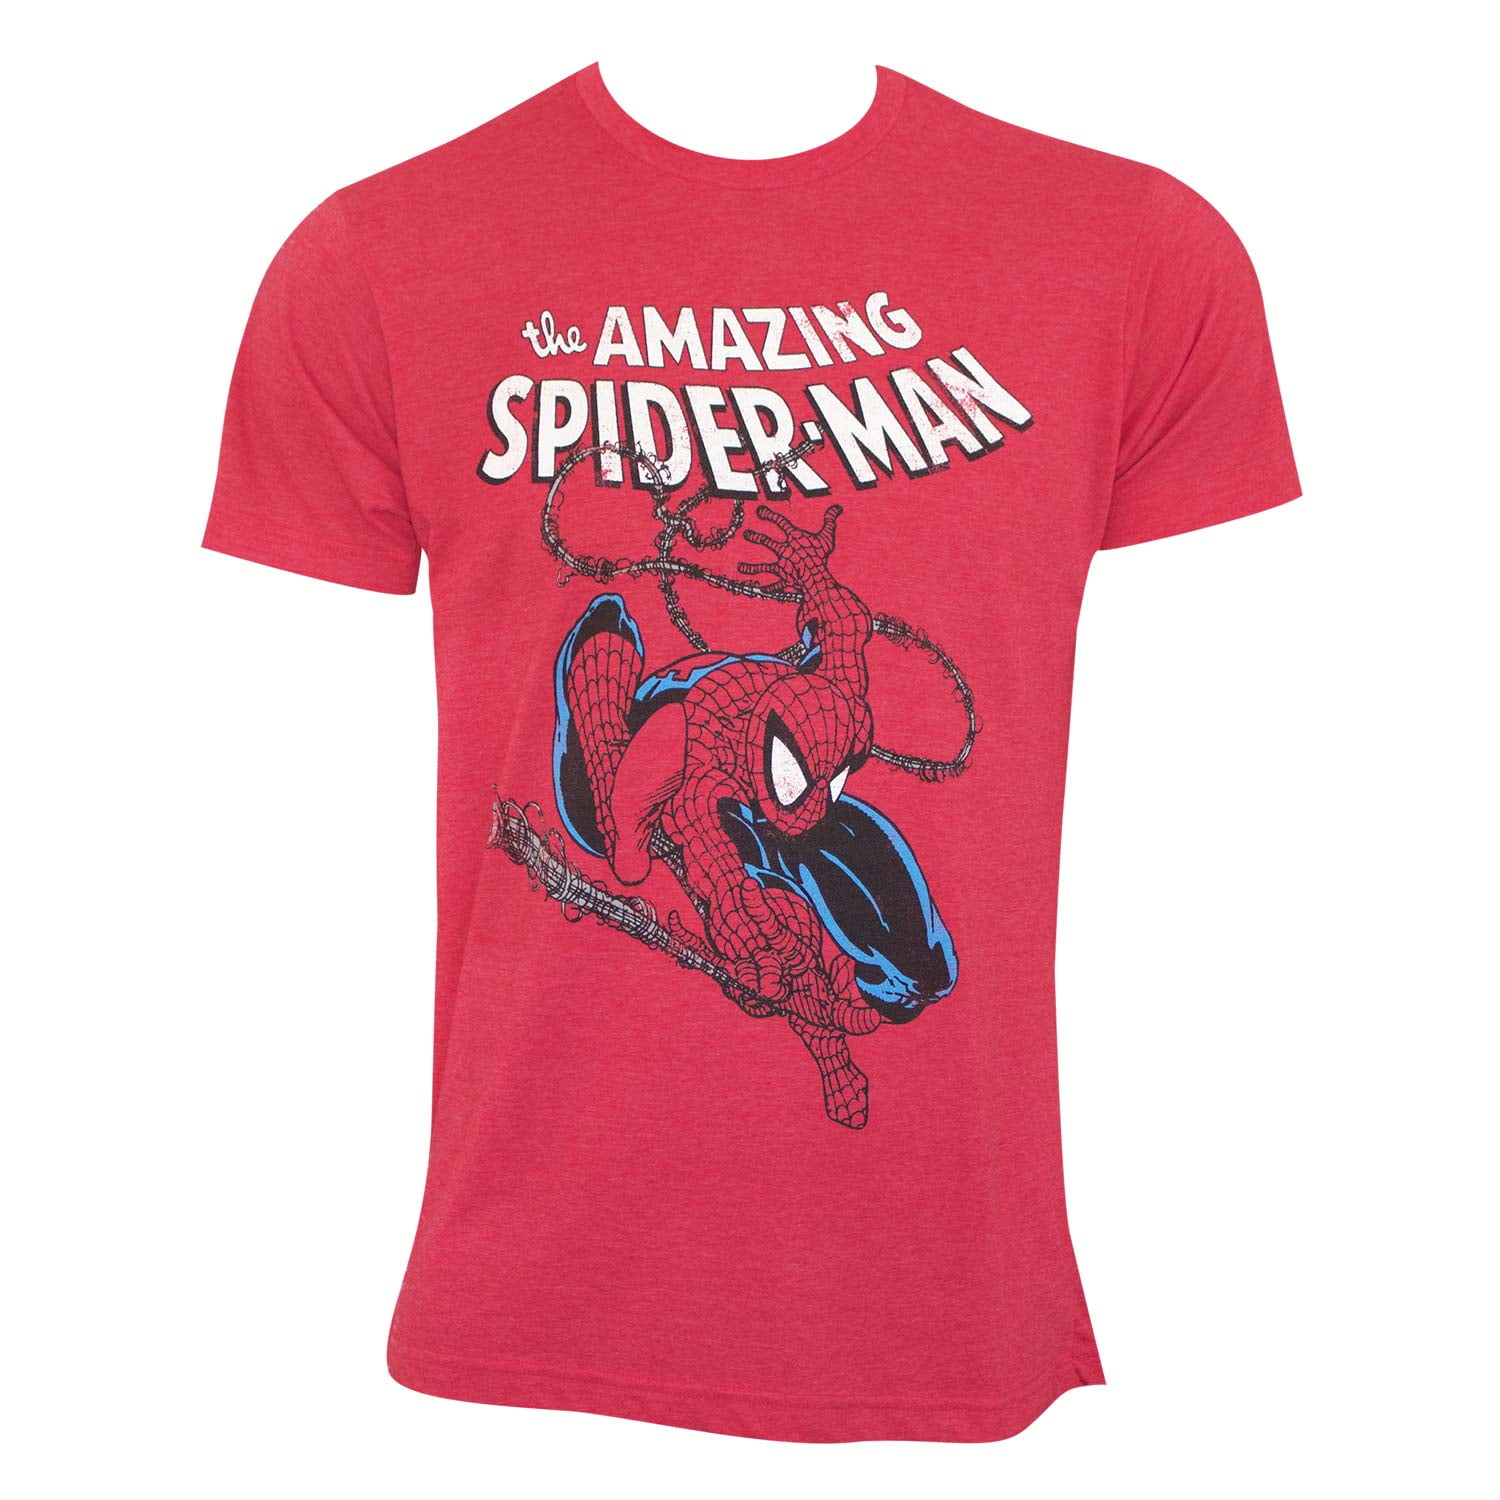 red spiderman shirt